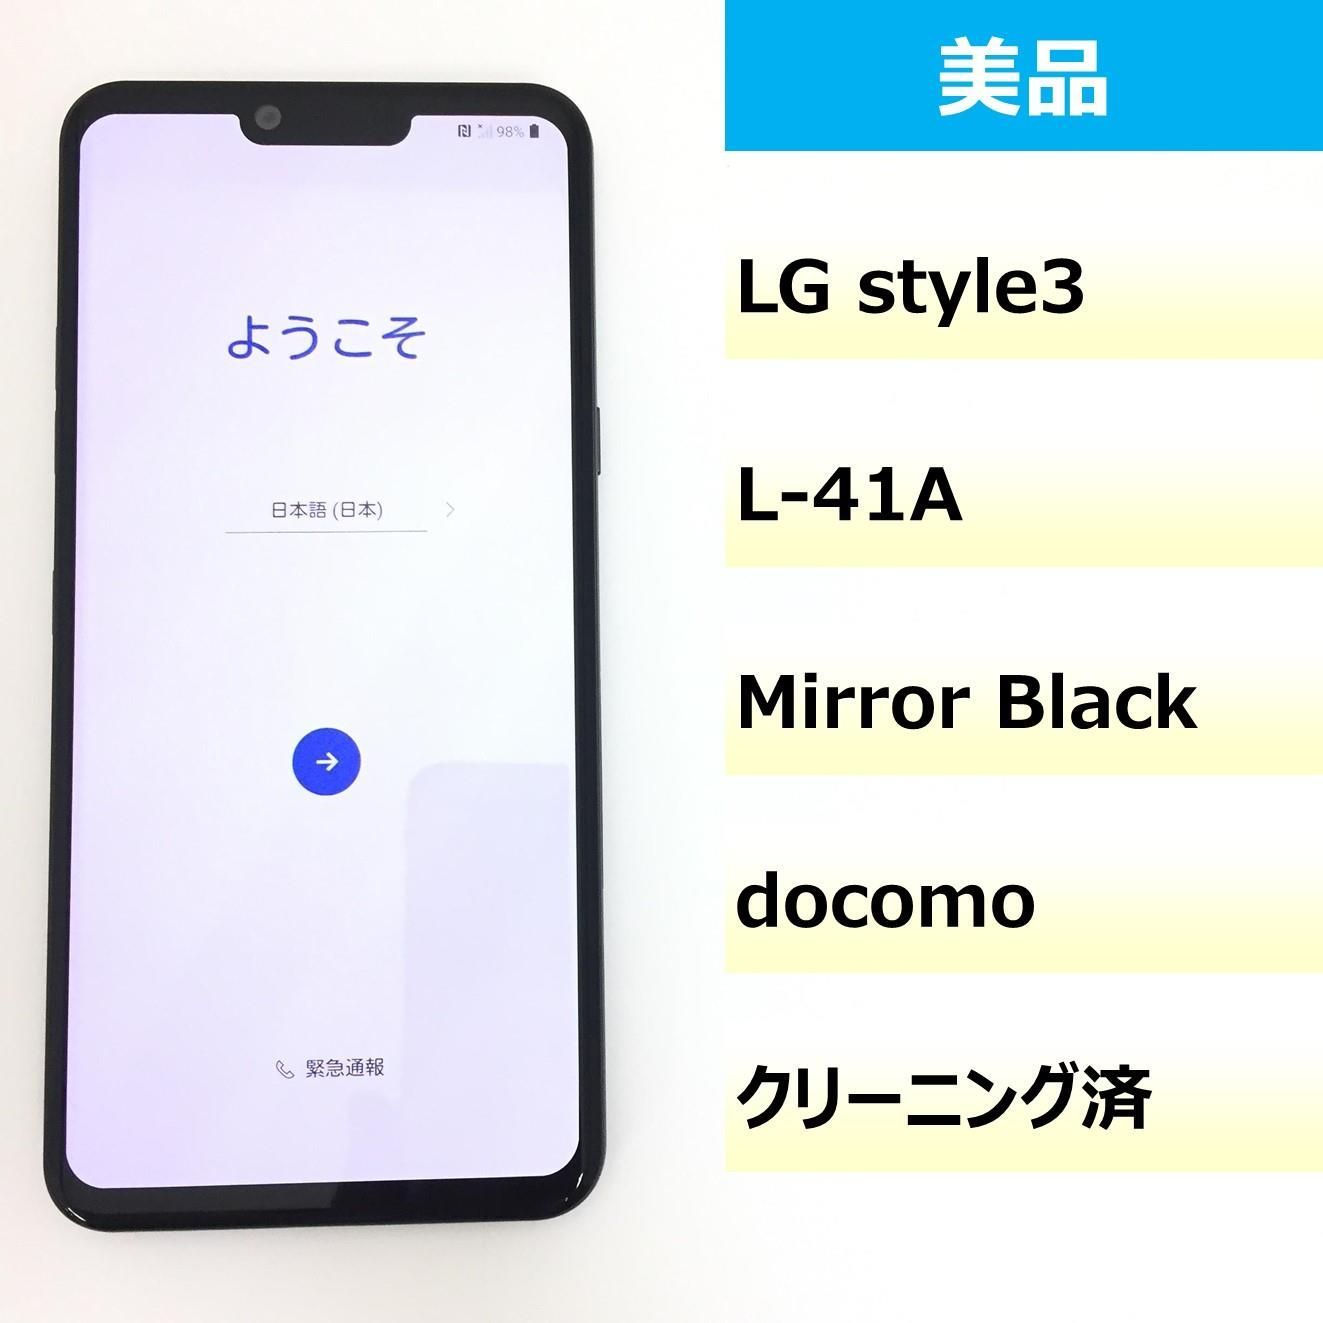 LG style3 L-41A Mirror Black docomo